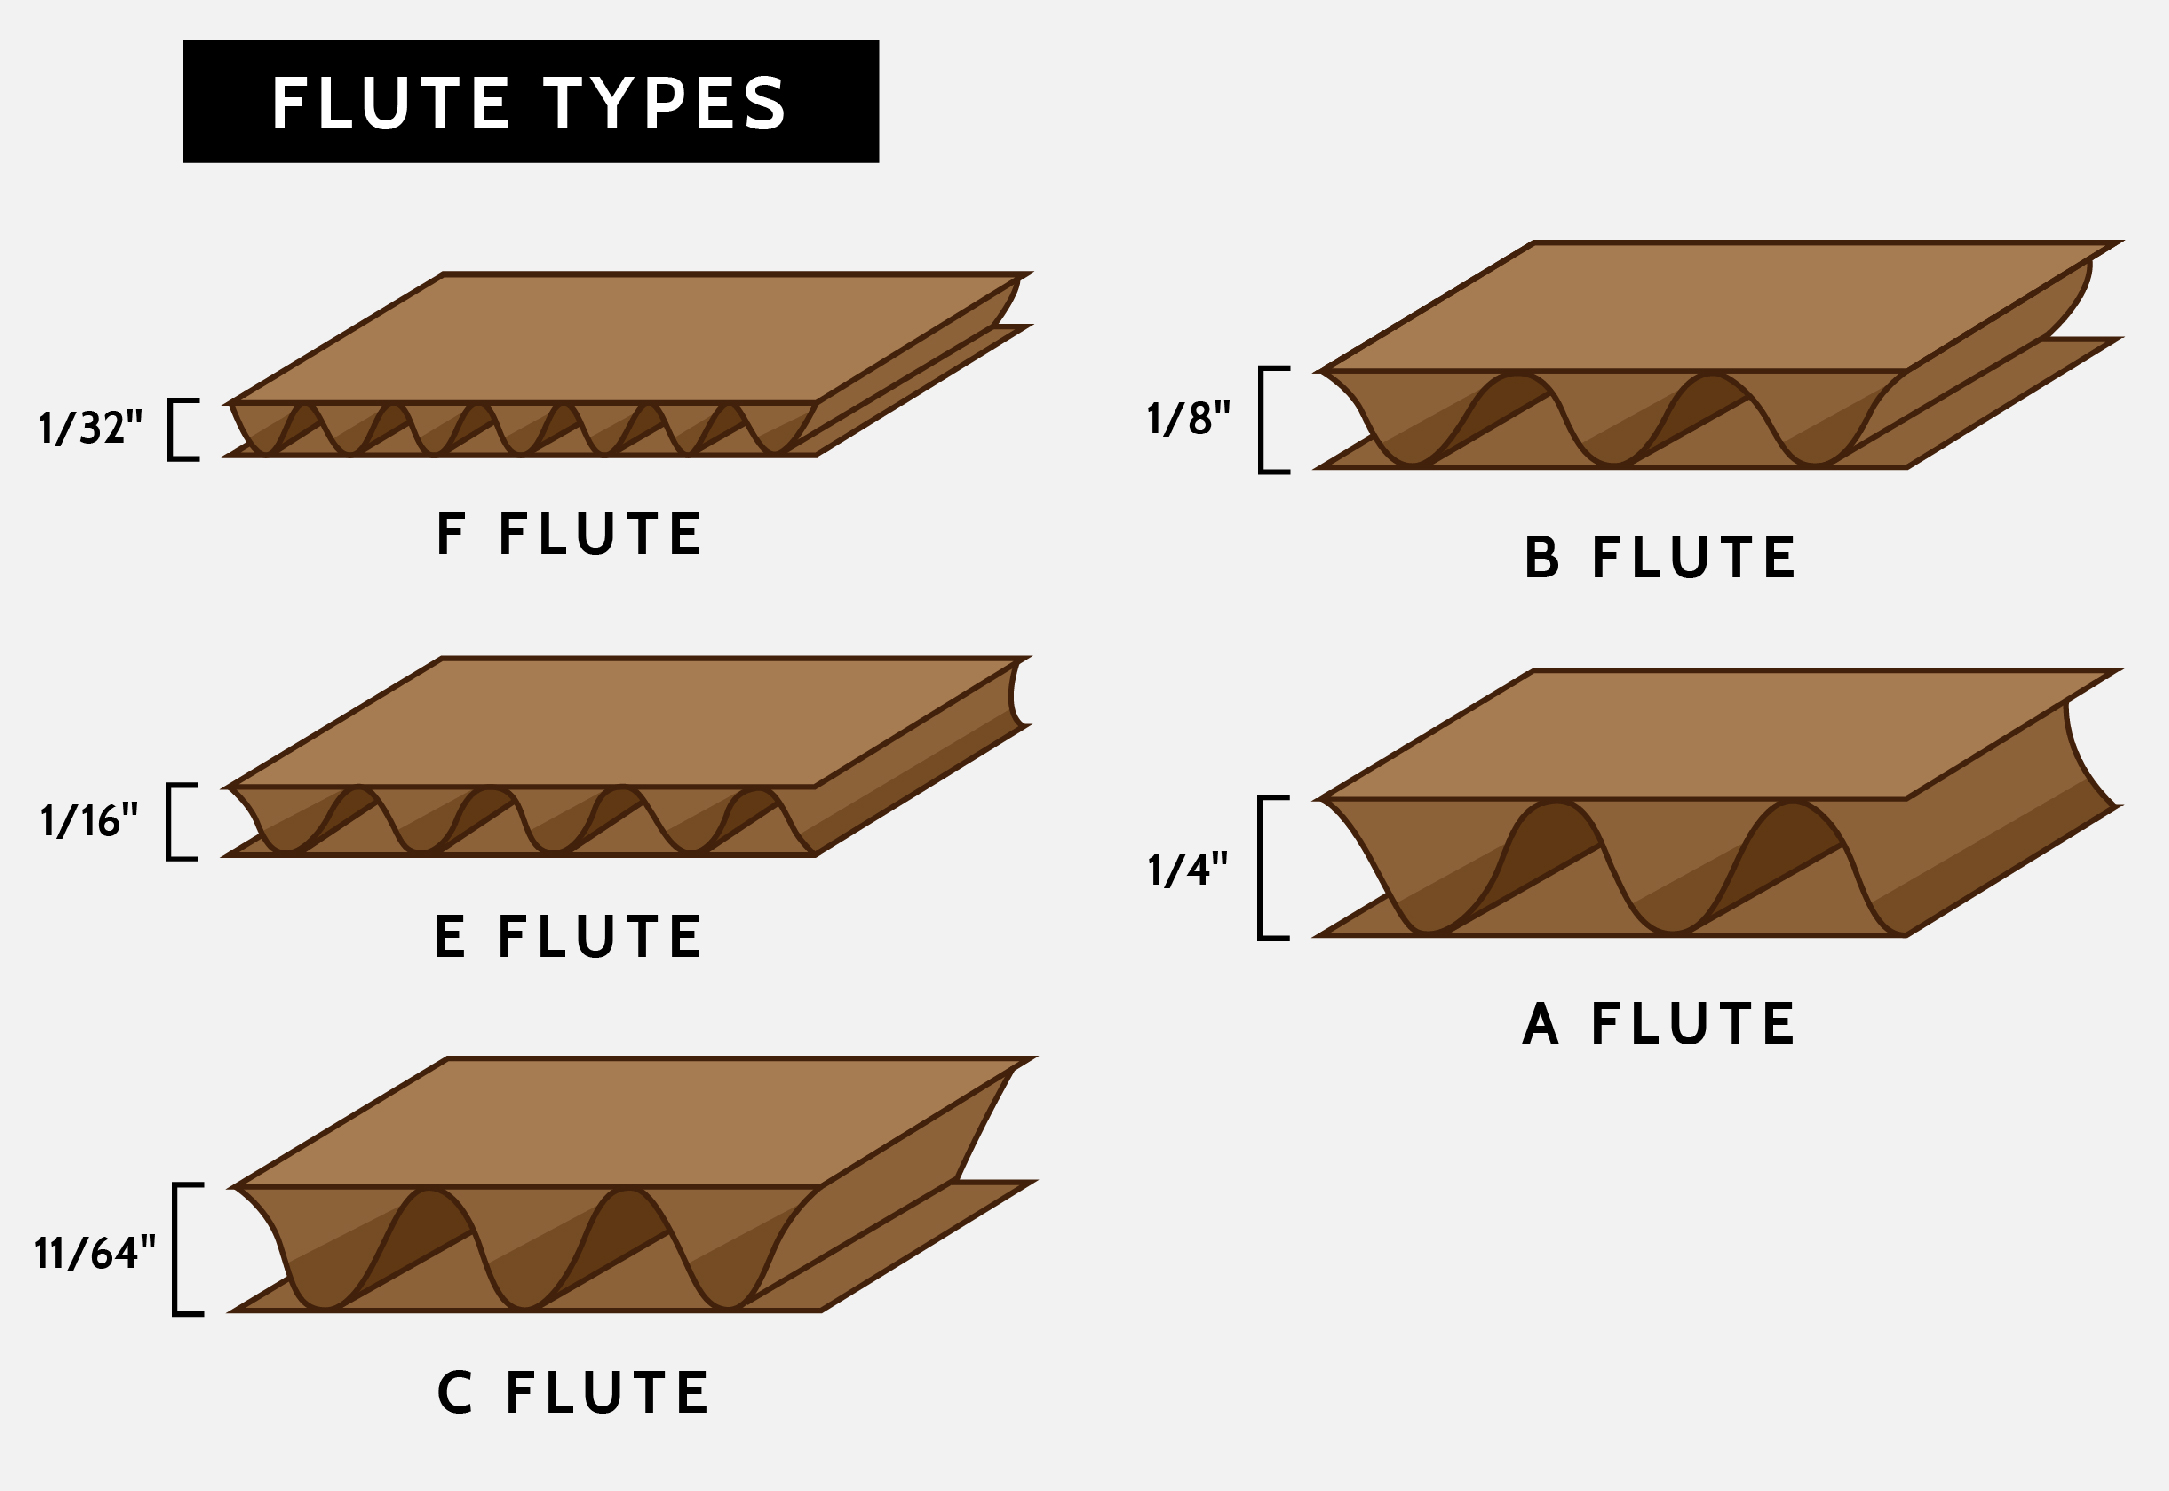 a through f flute types